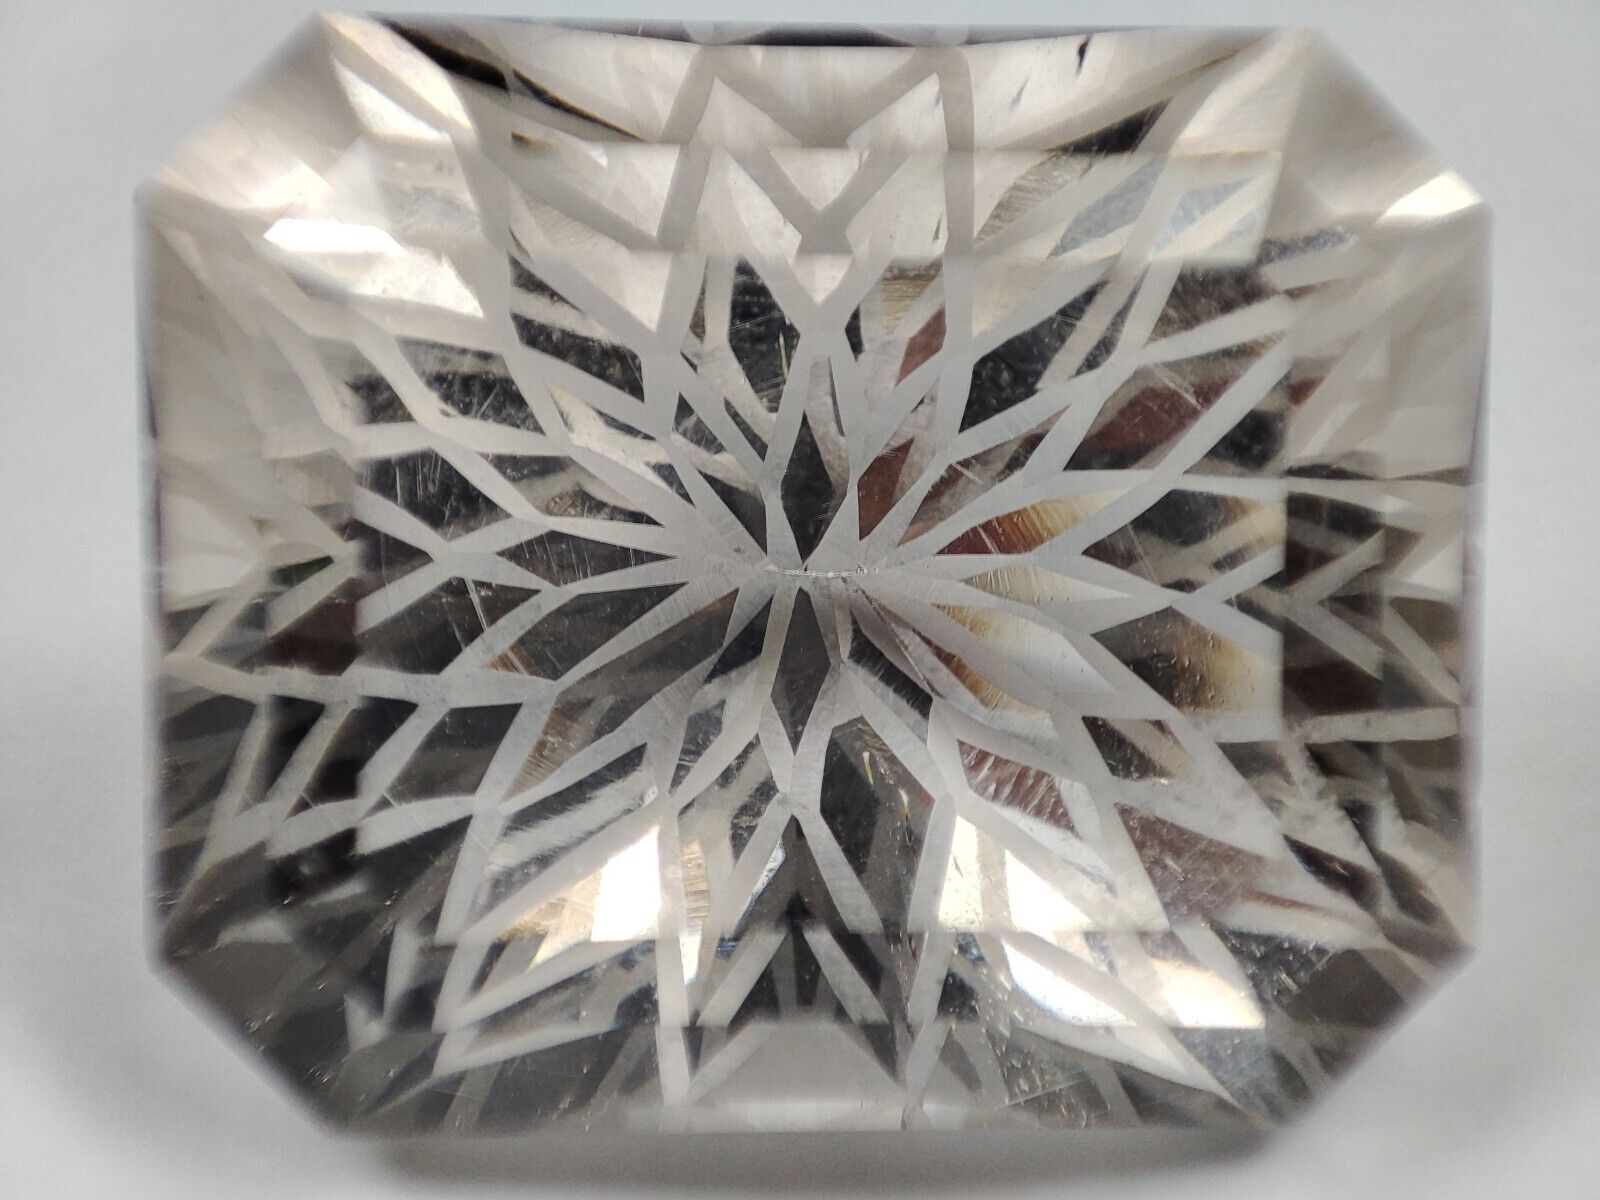 85 CT UNBELIEVABLE 100% Natural Quartz Clean Full Flower Cut Gemstone @PAK